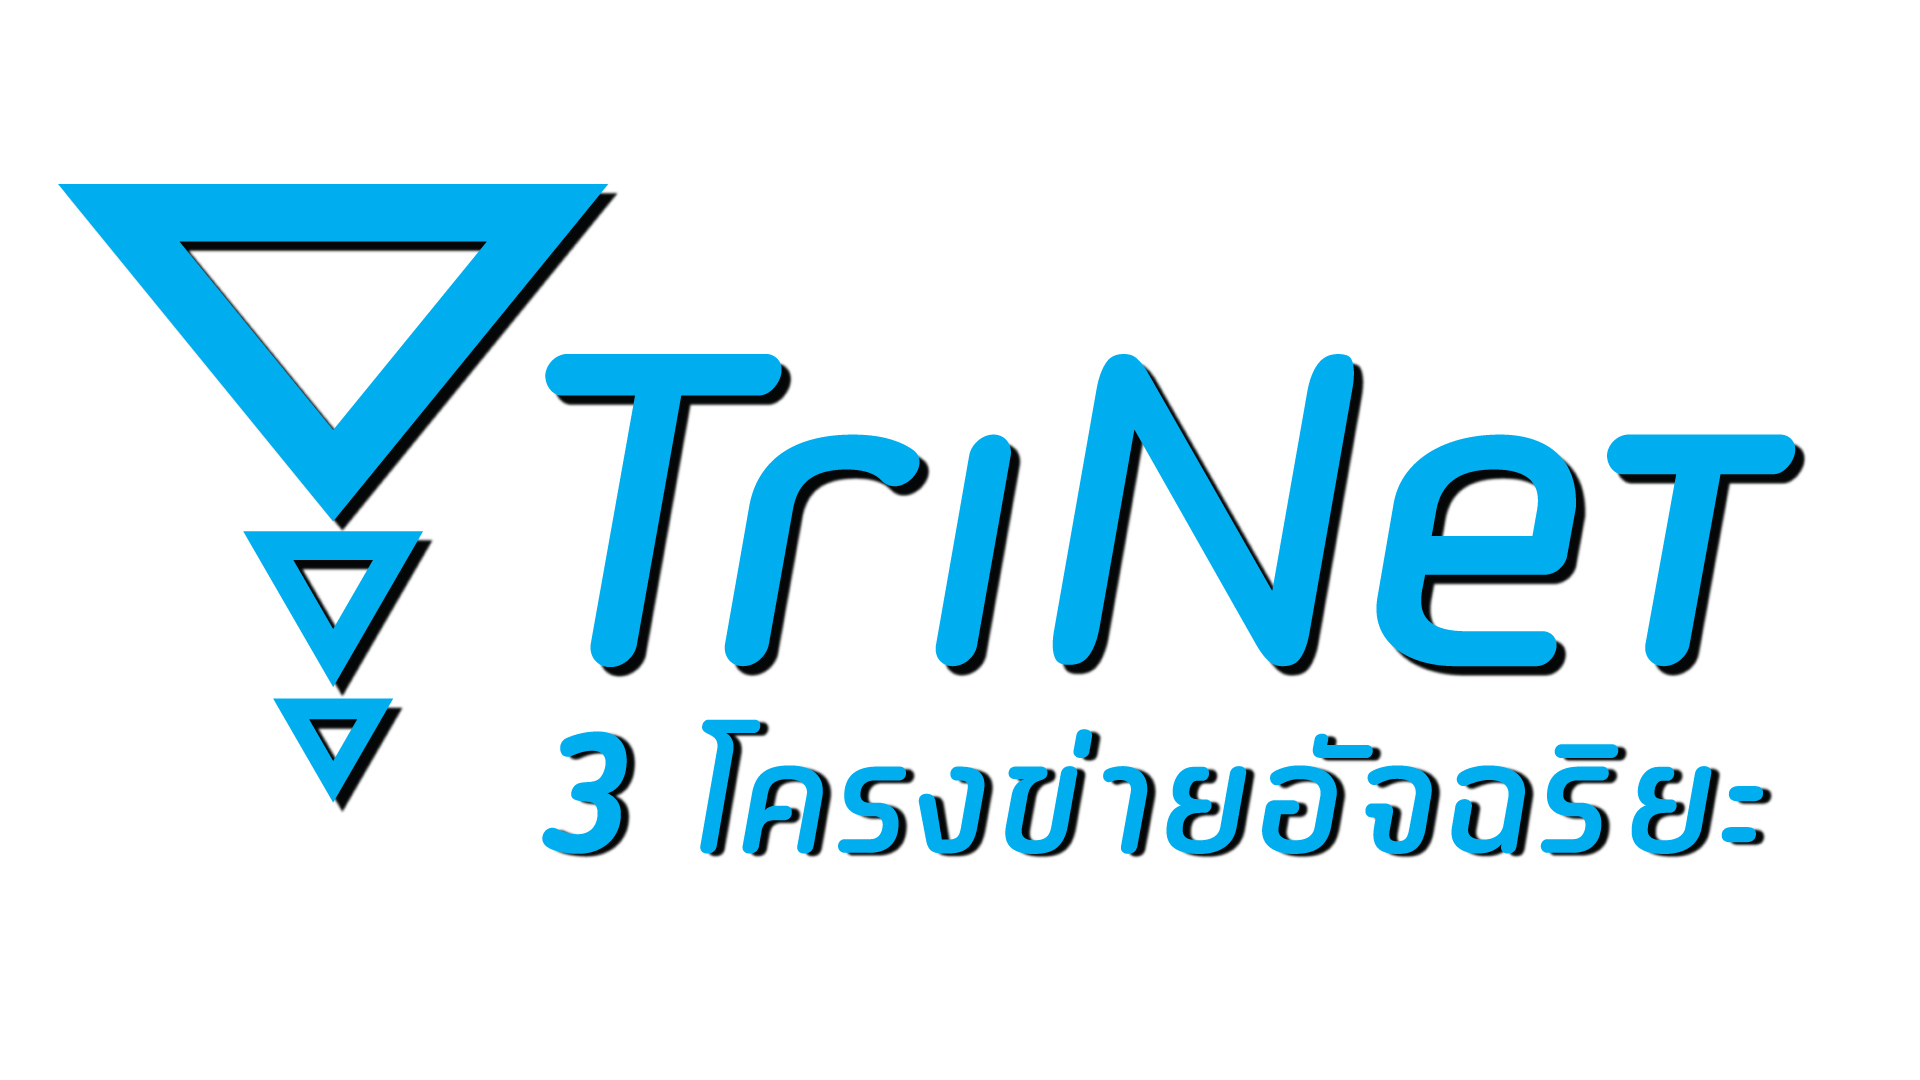 dtac ได้รับอนุญาตให้เปิดบริการ 4G LTE ในช่วงคลื่นความถี่ 2100 MHz ของ TriNet แล้ว